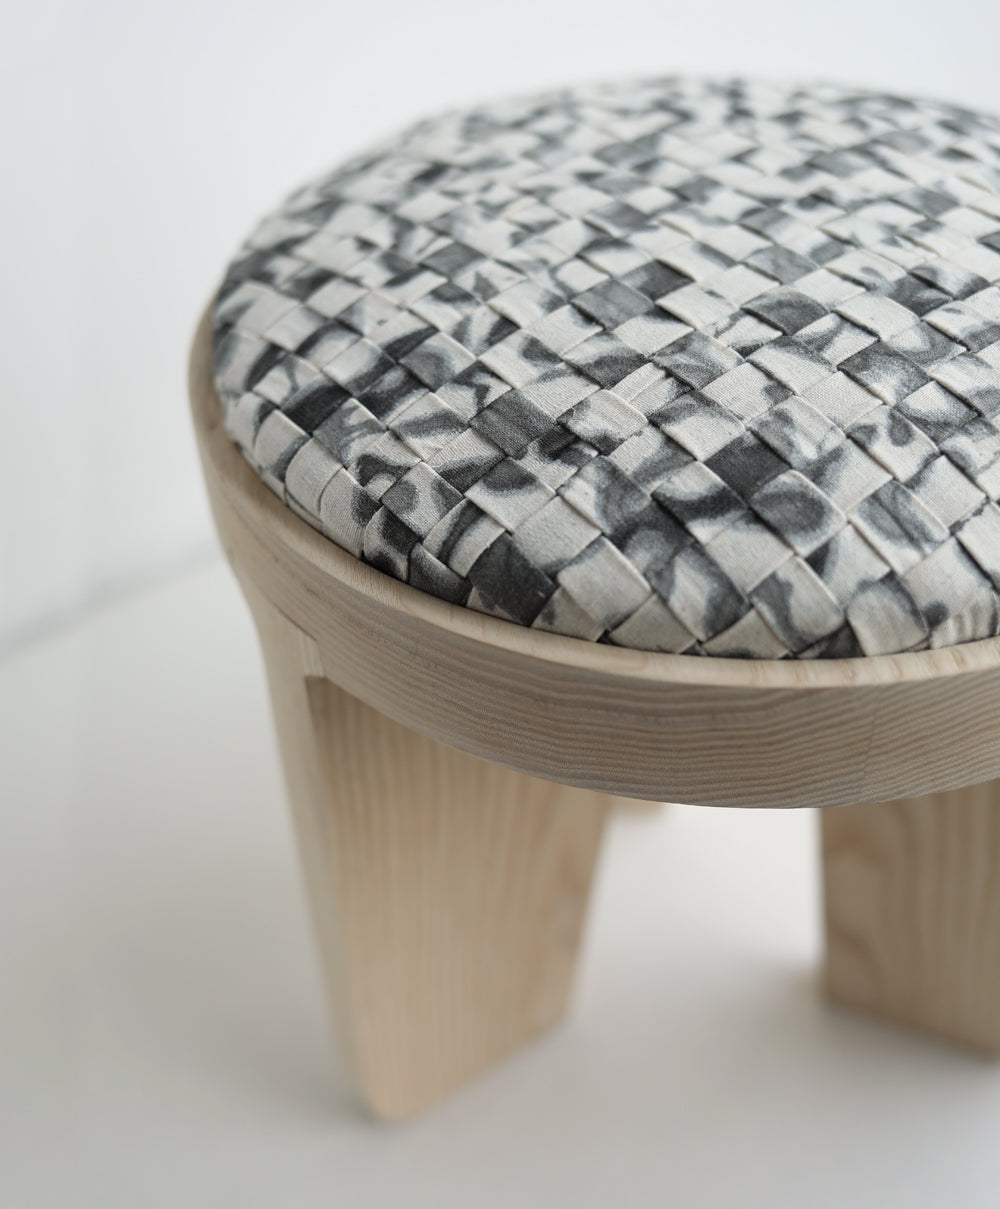 woven wood stool